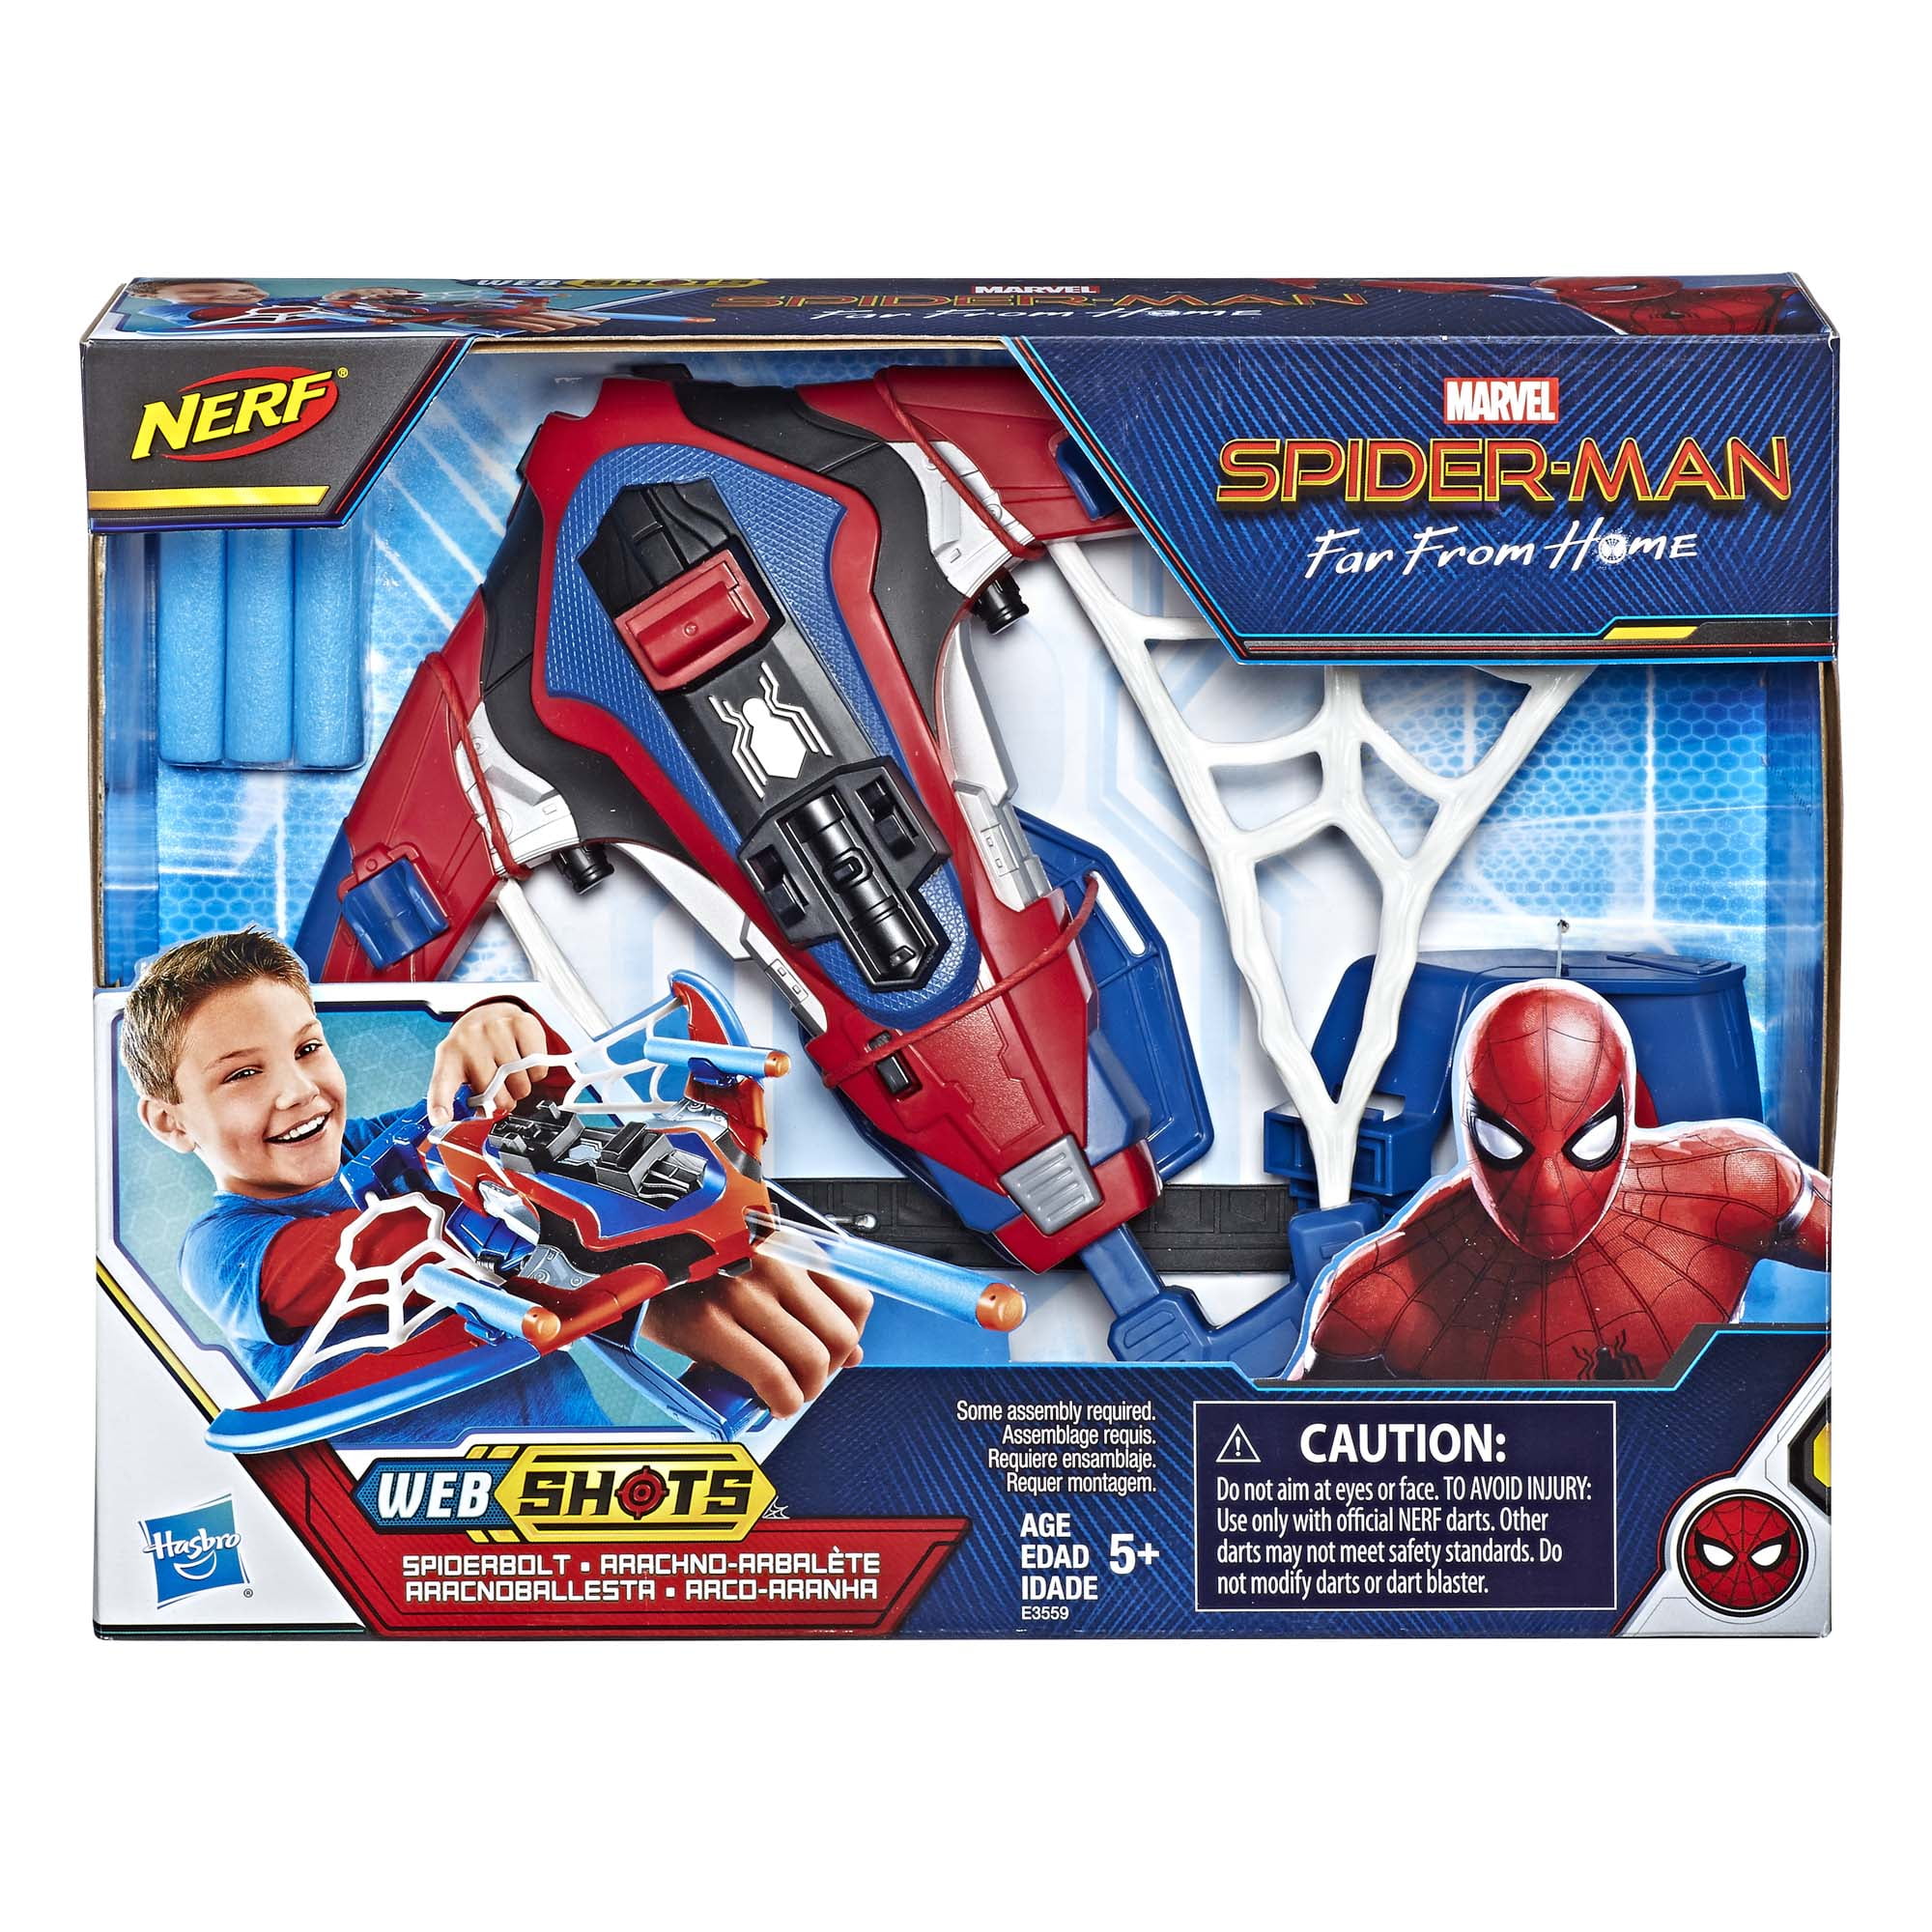 Spider-man Web Shots Scatterblast Blaster Toy for Kids Ages 5 & up for sale online 